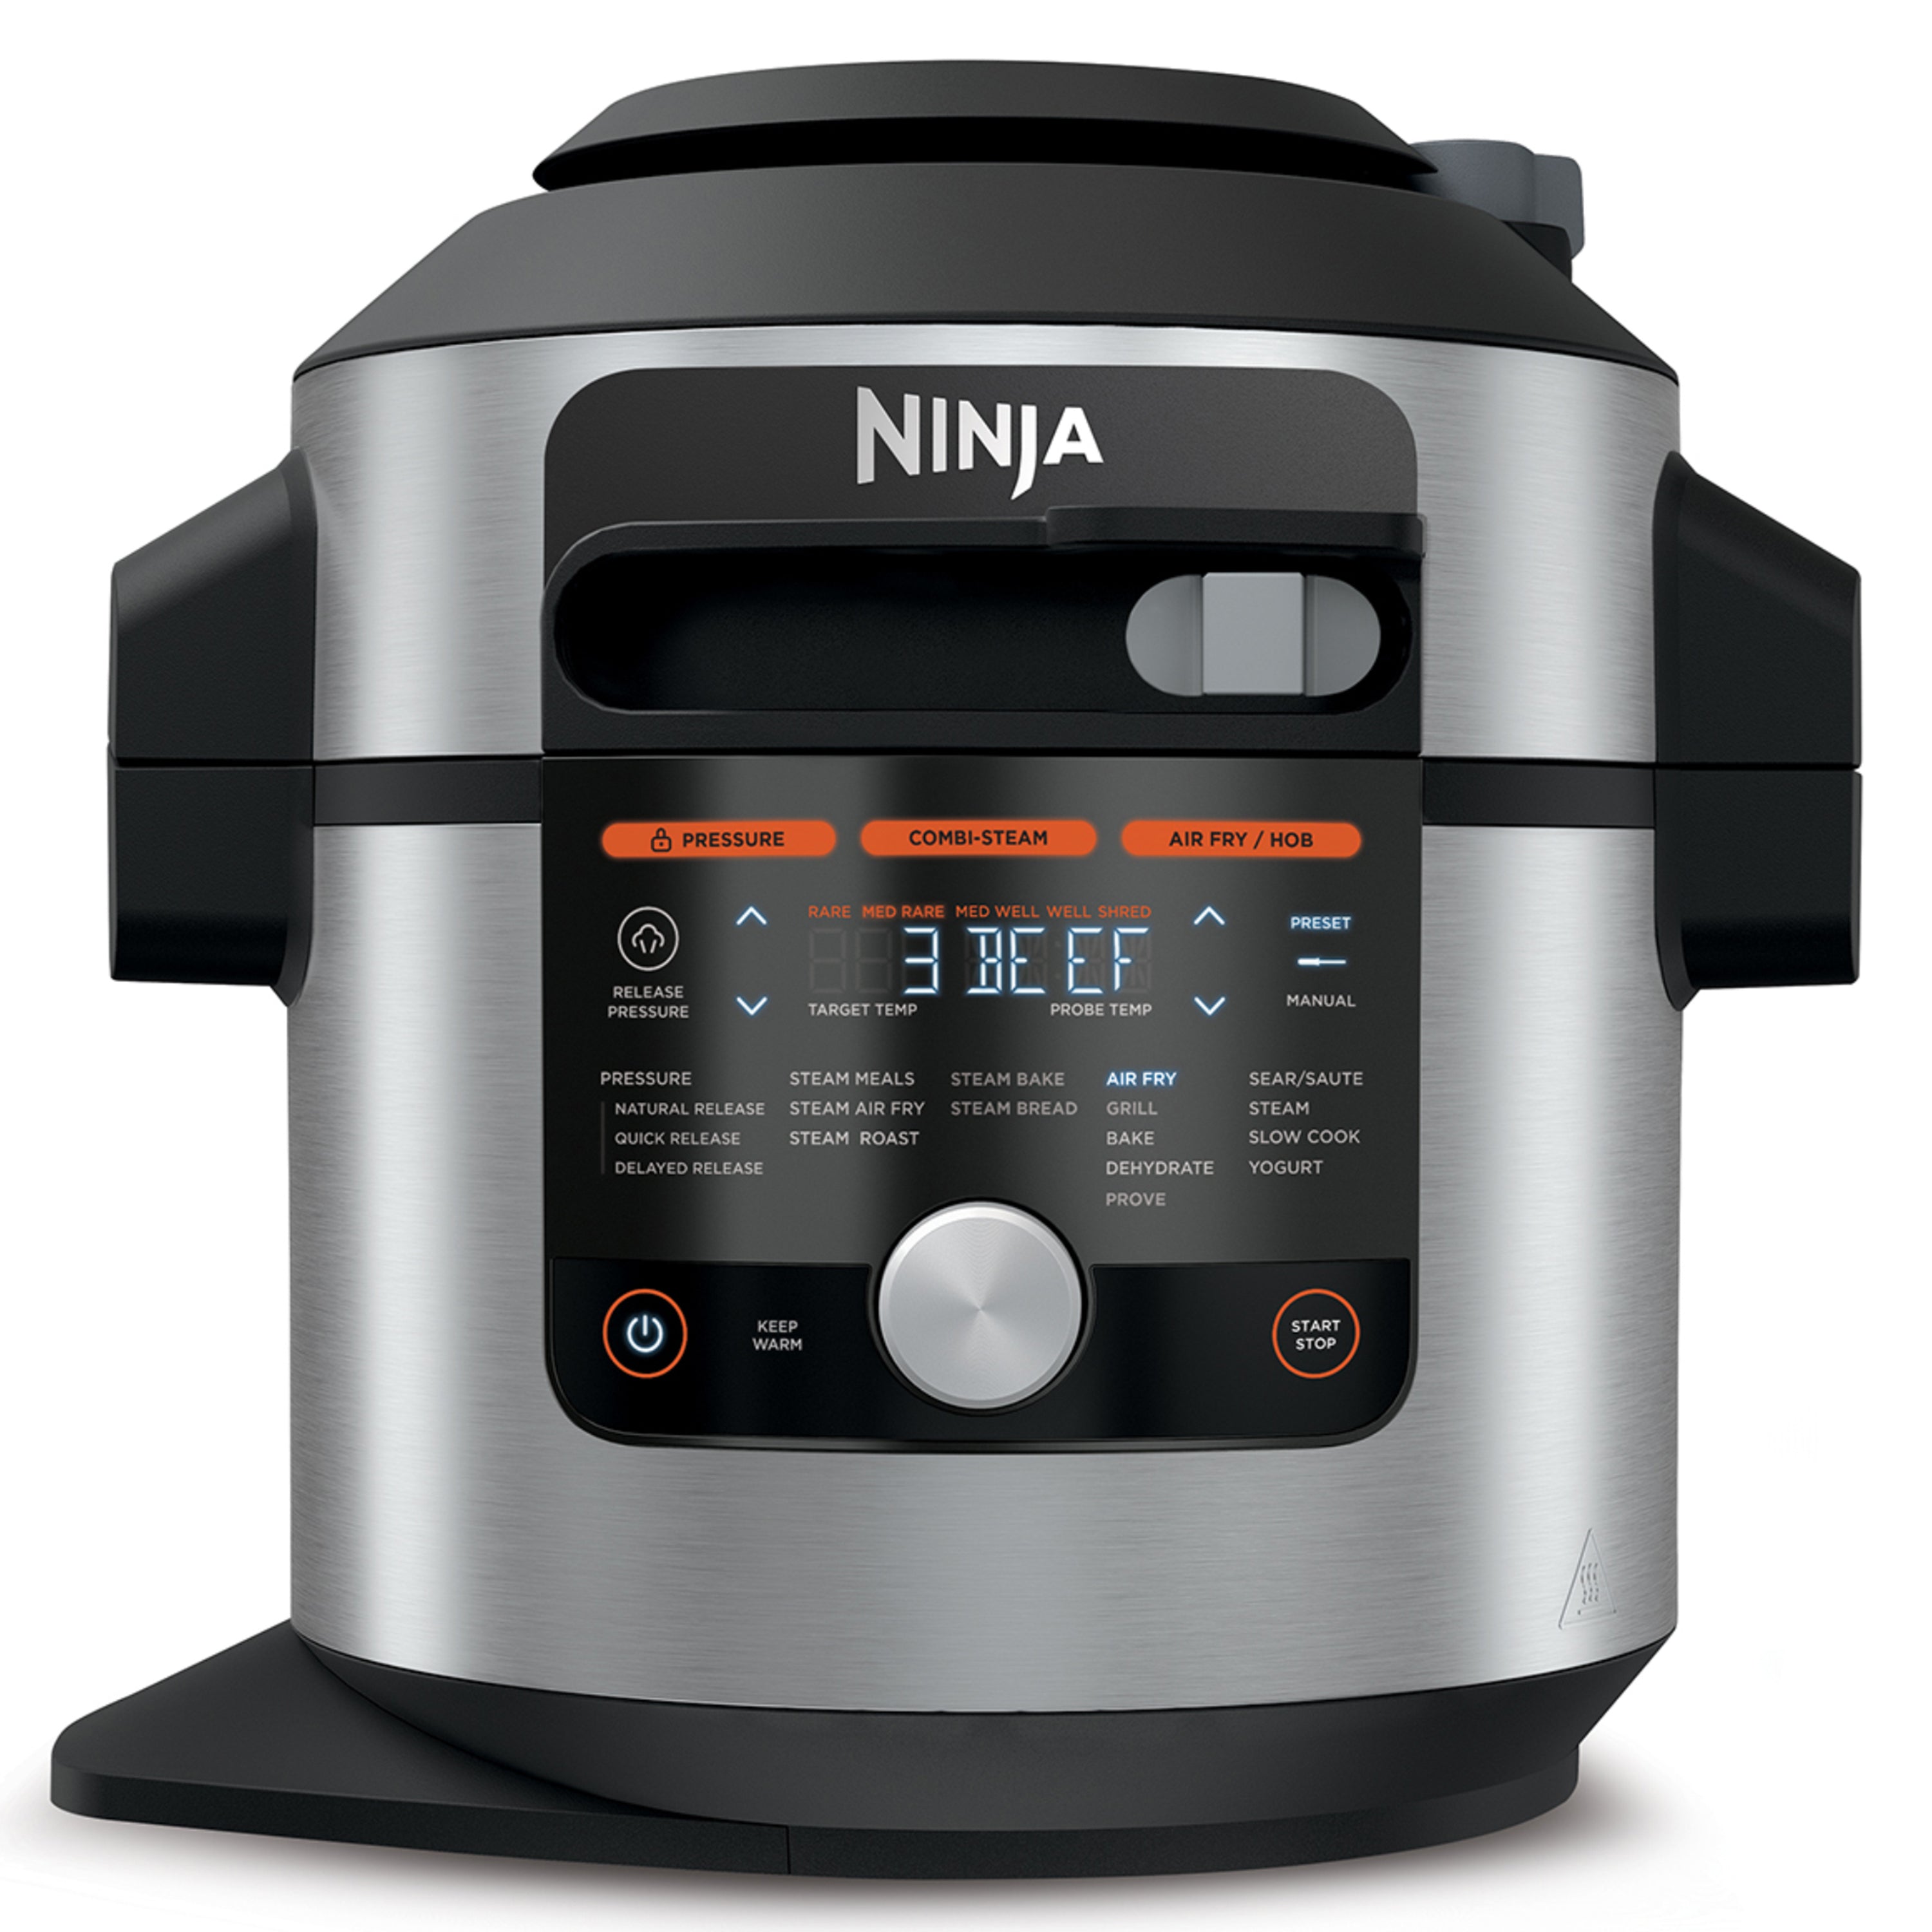 Ninja Foodi 14-in-1 Multicooker - OL750EU